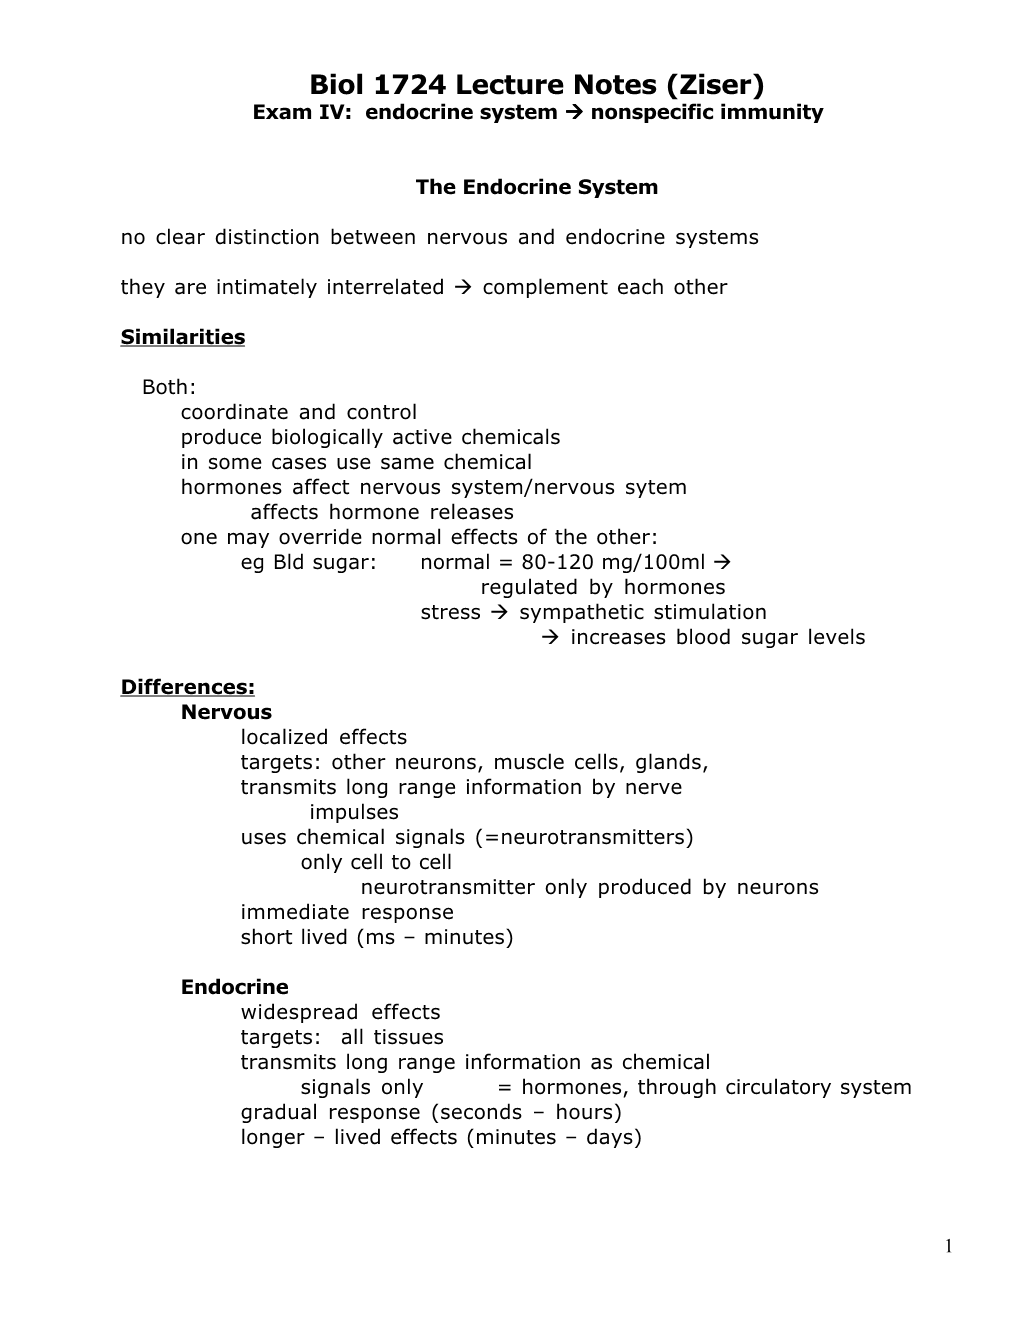 Biol 1724 Lecture Notes (Ziser) Exam IV: Endocrine System  Nonspecific Immunity